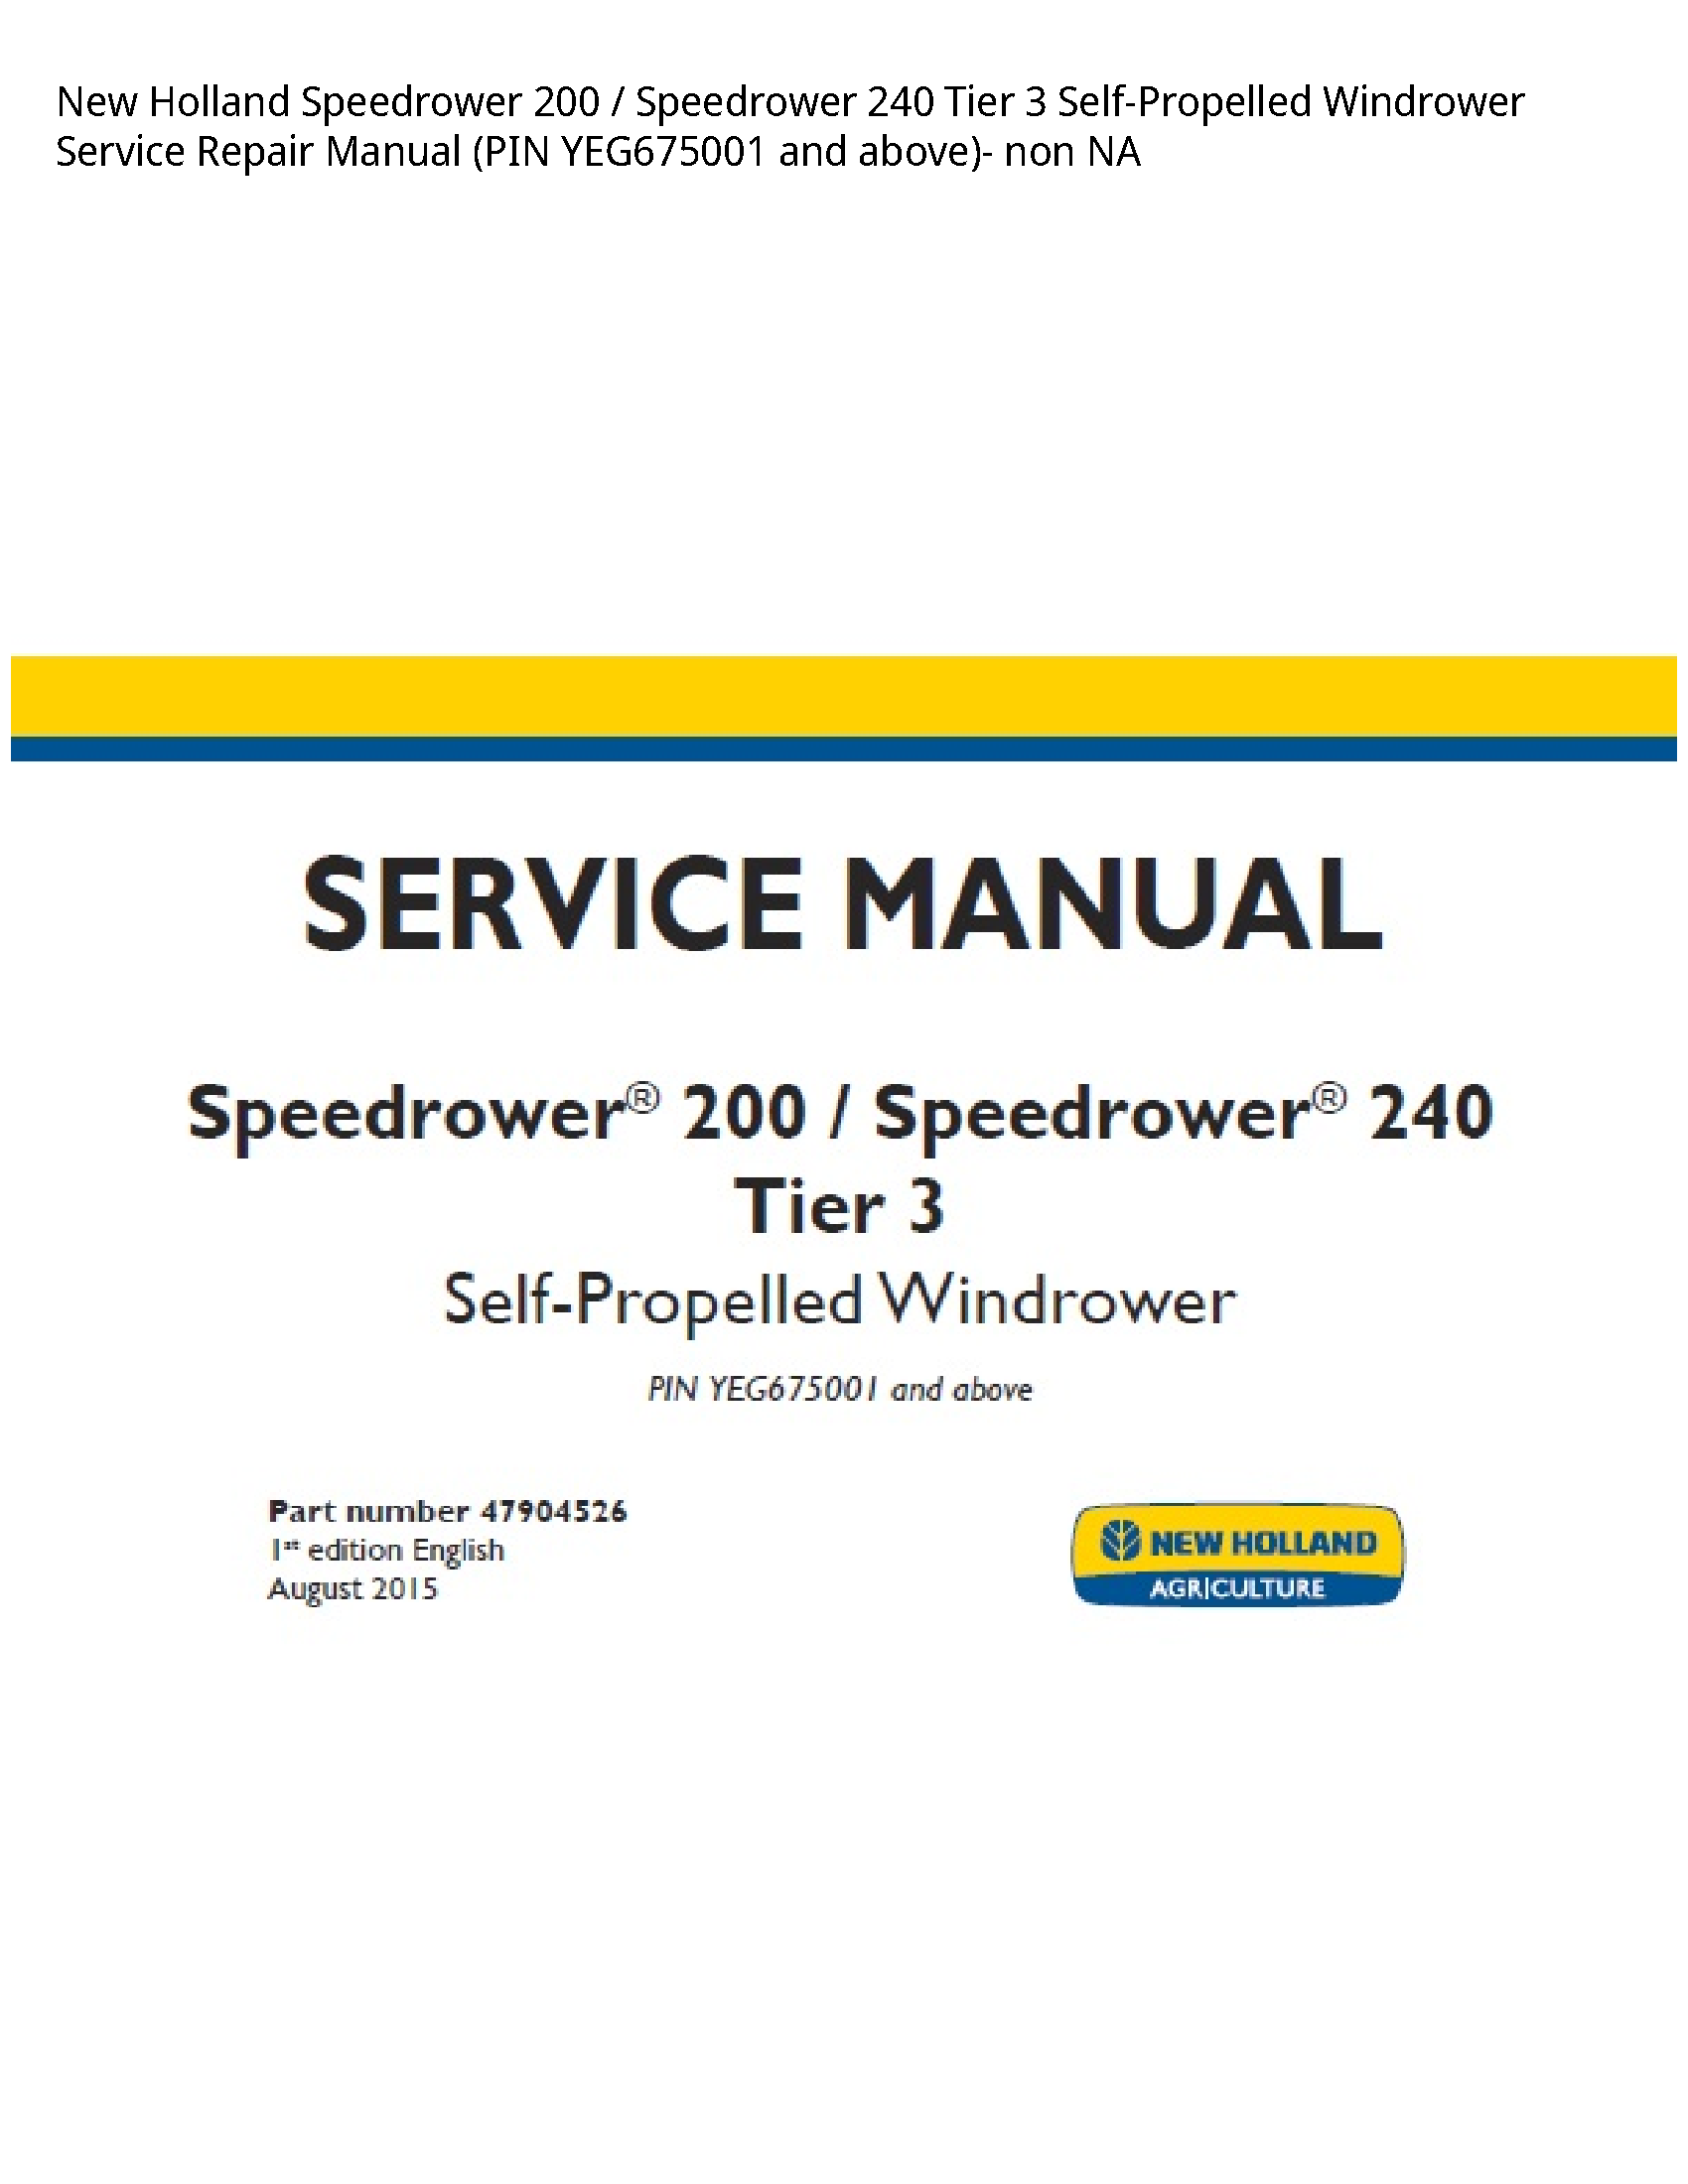 New Holland 200 Speedrower Speedrower Tier Self-Propelled Windrower manual